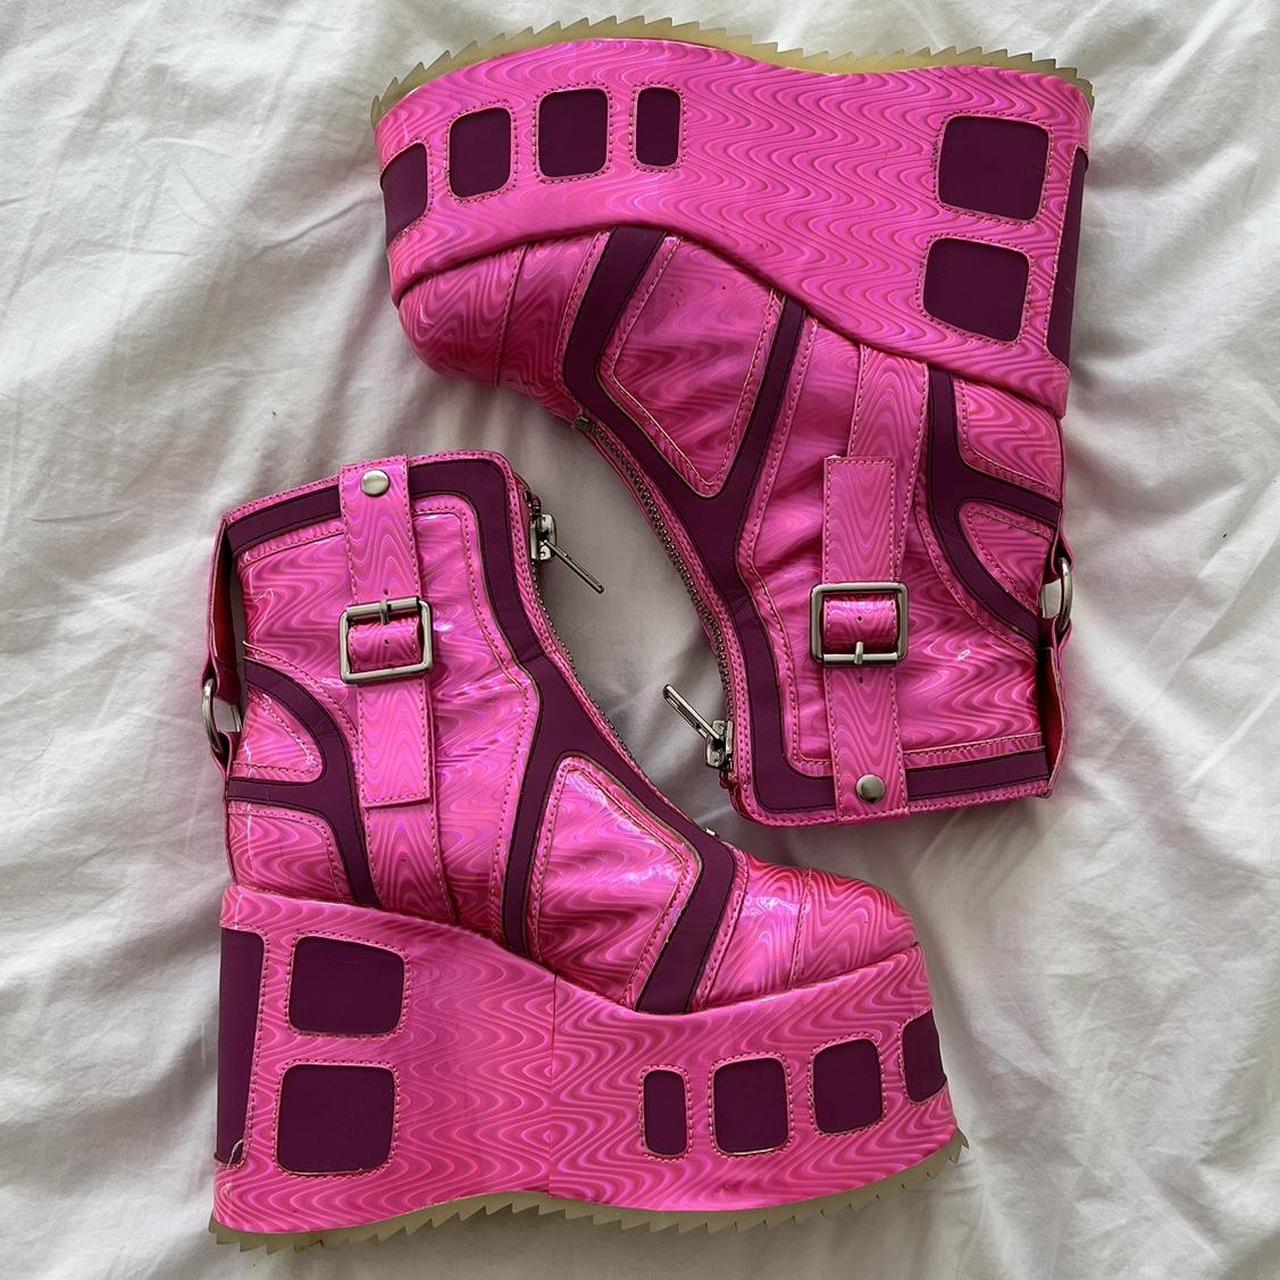 Club Exx Women's Footwear - Pink - US 7